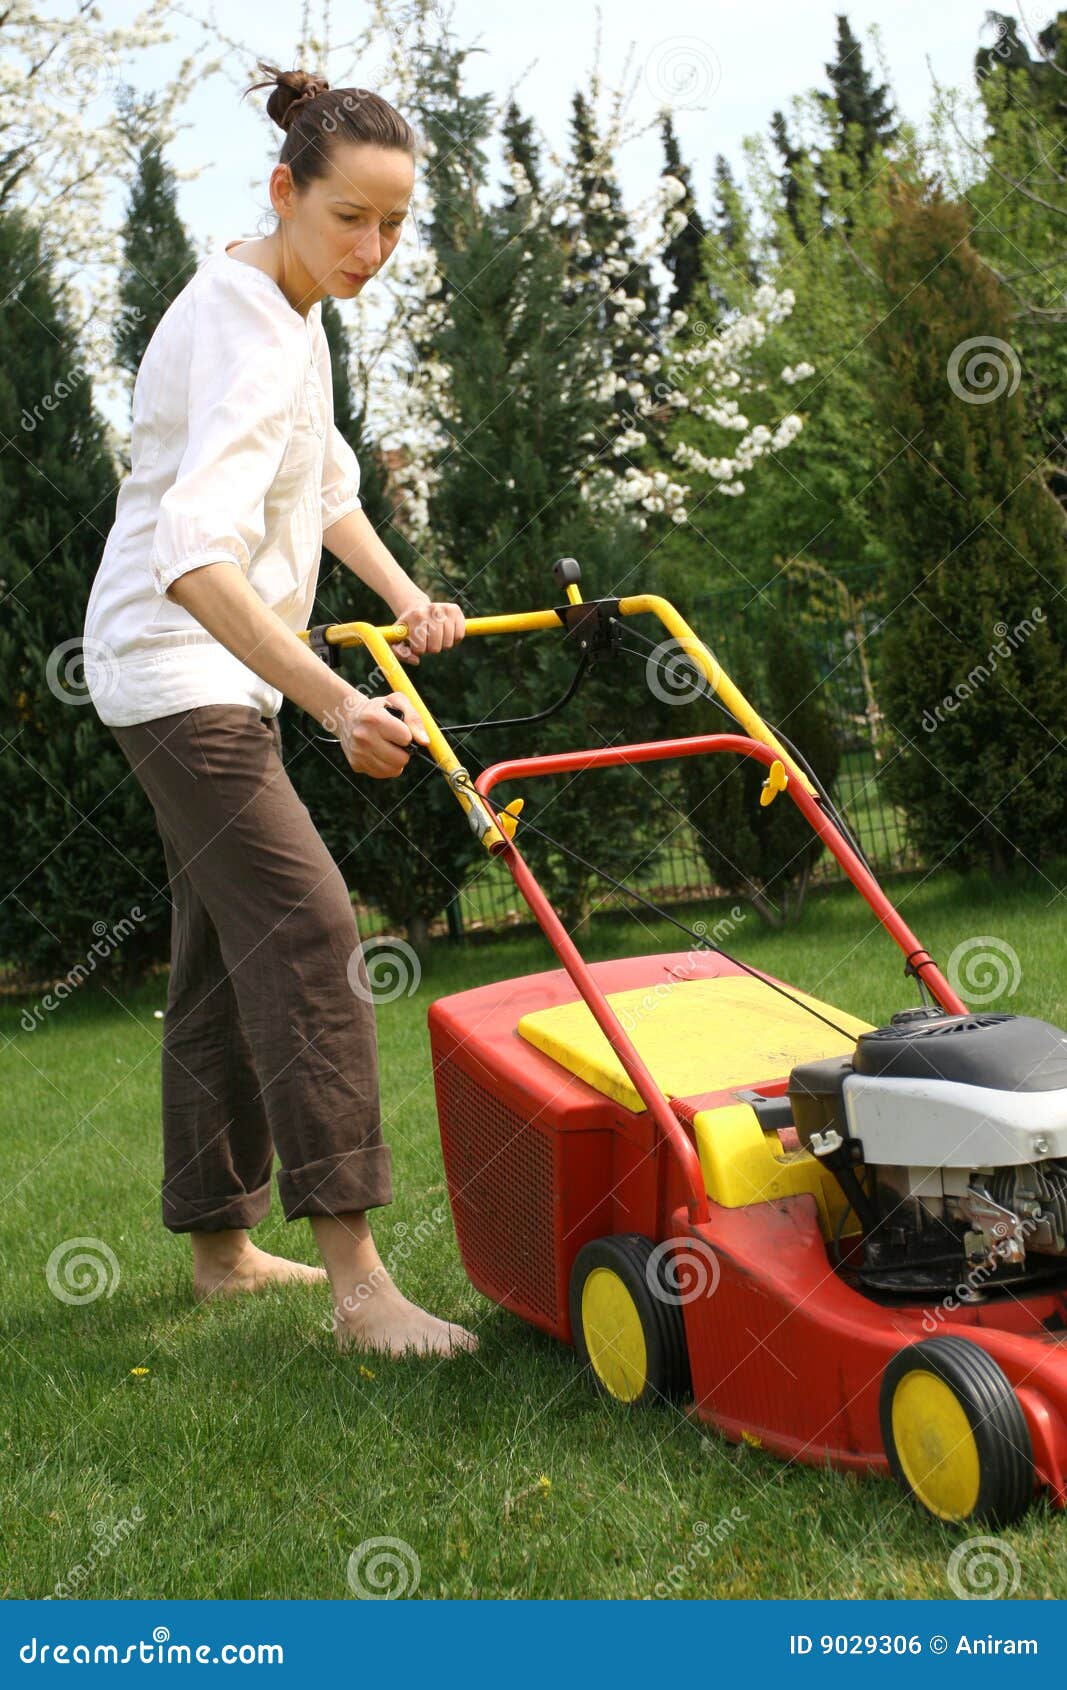 https://thumbs.dreamstime.com/z/woman-mowing-grass-9029306.jpg